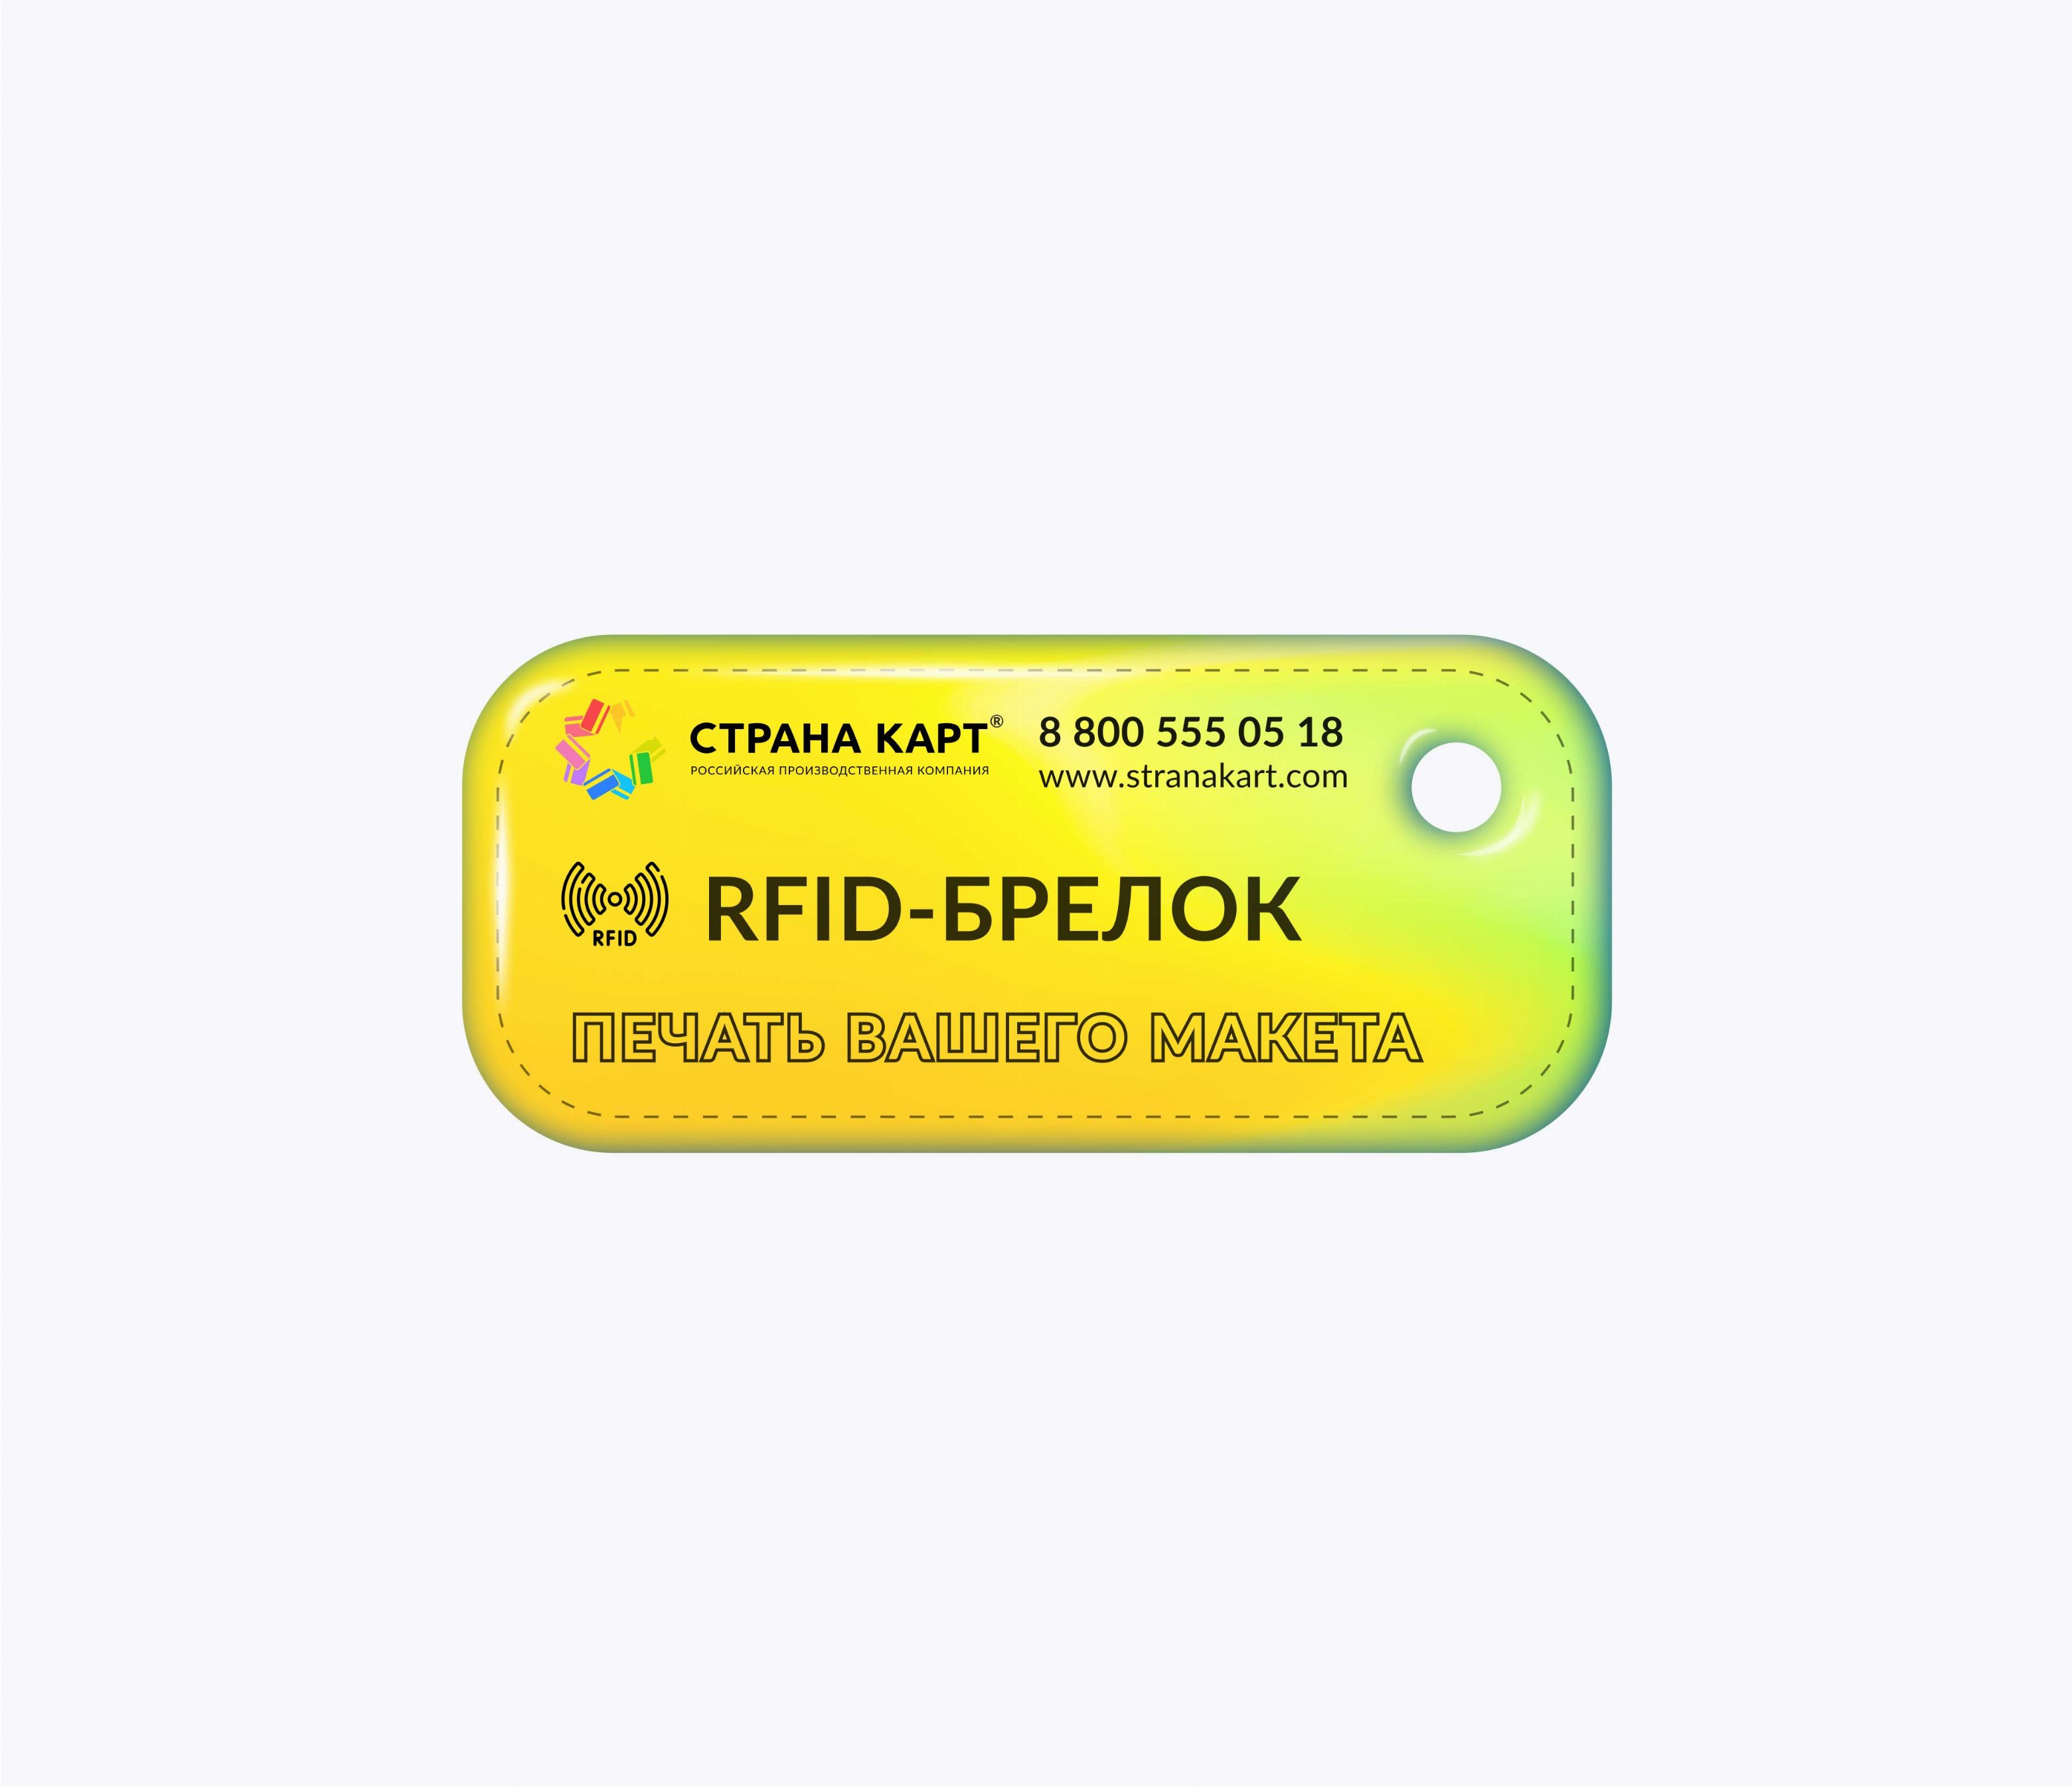 Прямоугольные мини RFID-брелоки NEOKEY® с чипом NXP MIFARE Ultralight 7 byte UID RFID-брелоки NEOKEY® с чипом NXP MIFARE Ultralight 7 byte UID и вашим логотипом